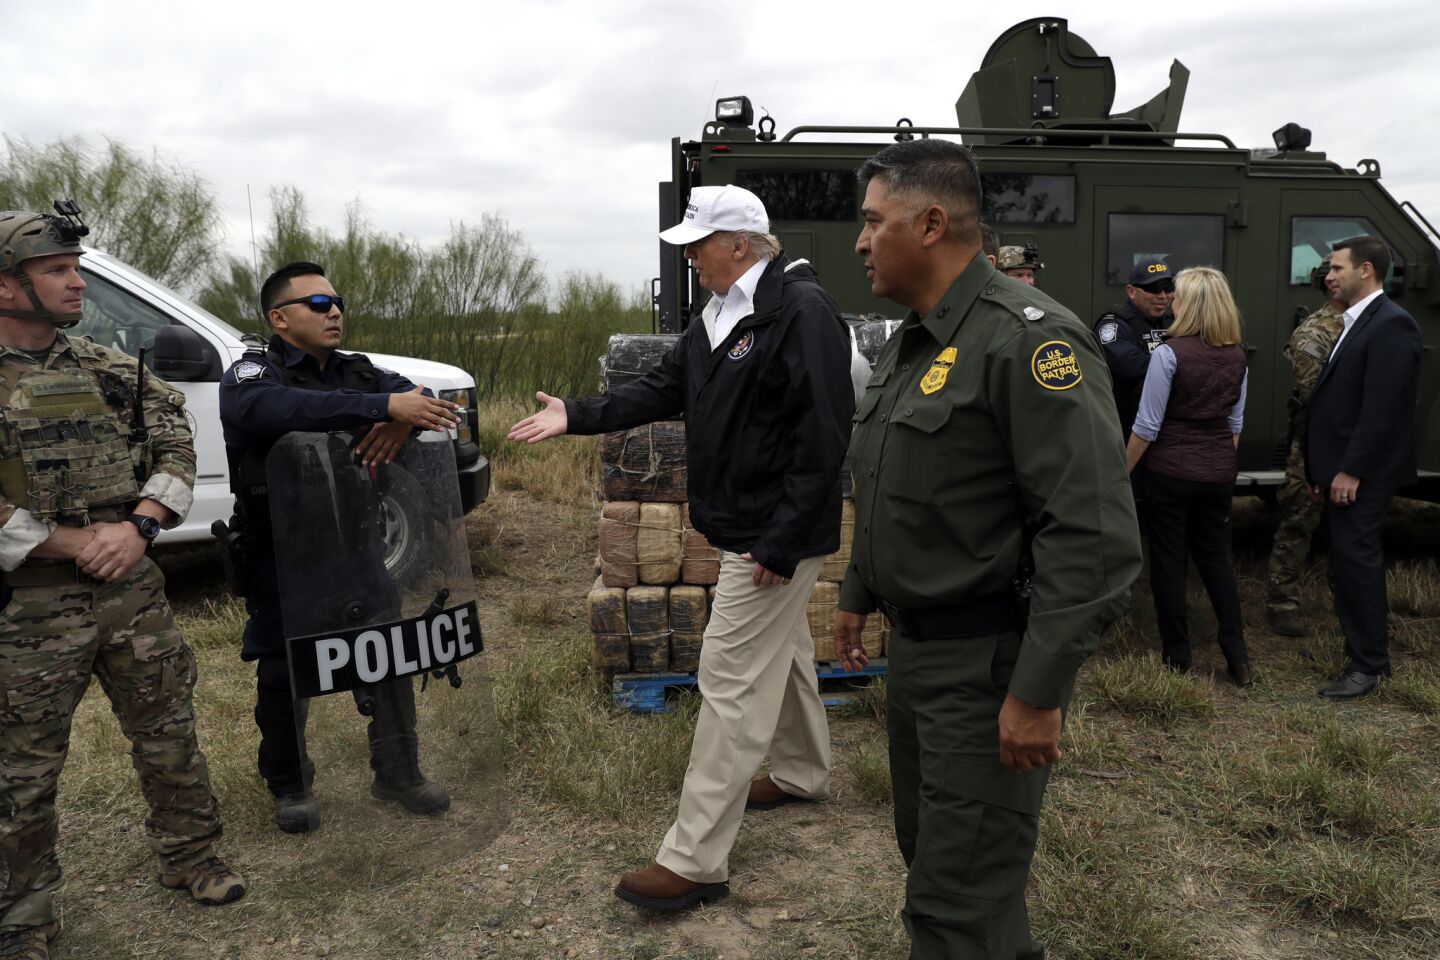 President Trump's border visit